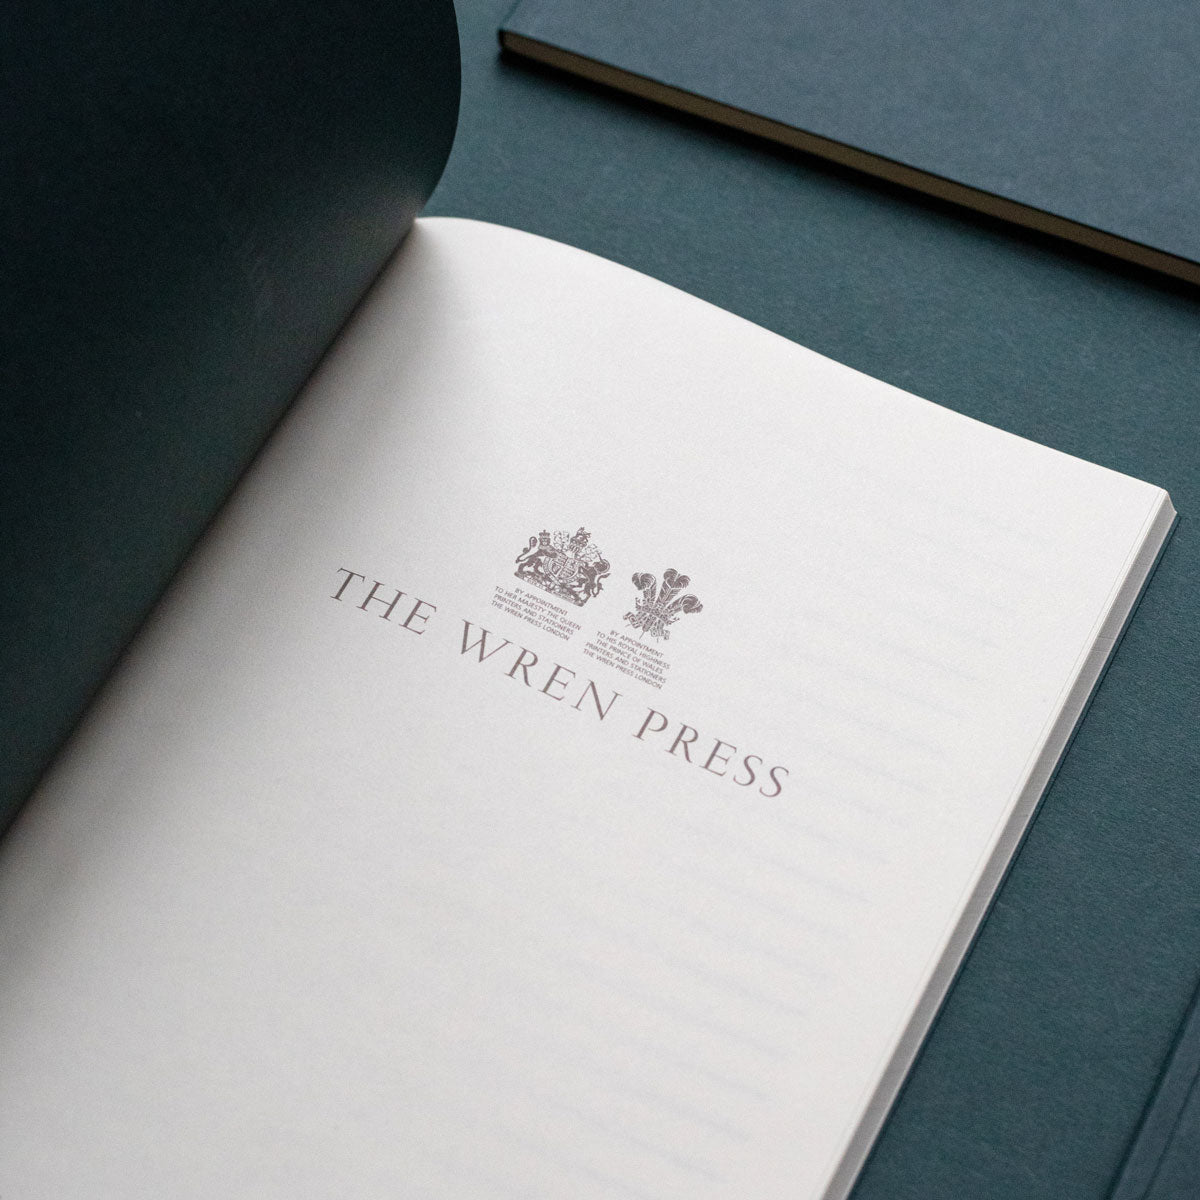 royal warrants printed inside a luxury notebook